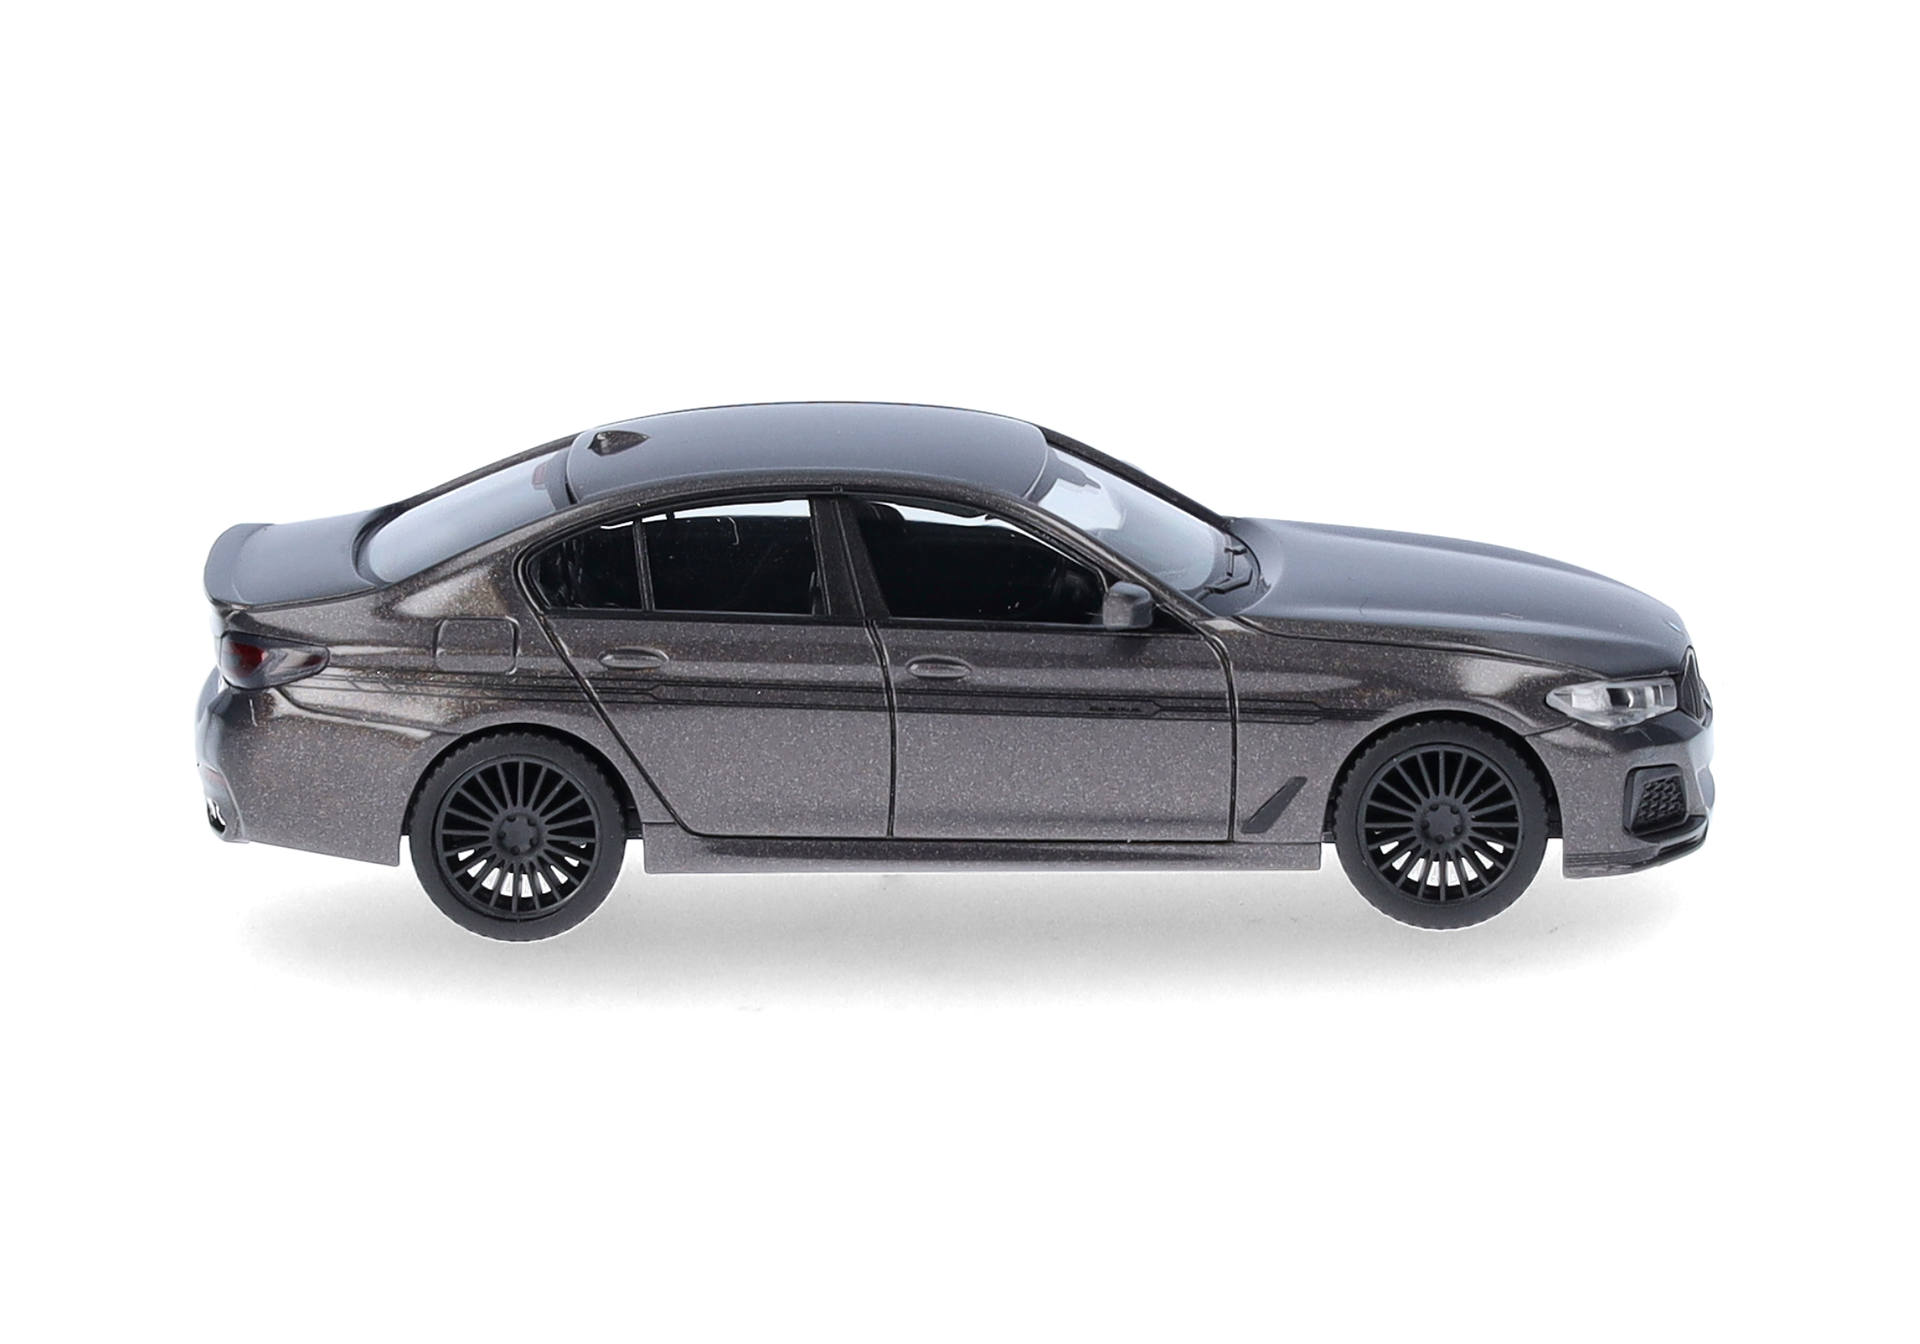 BMW Alpina B5 Limousine, champagner quarz metallic